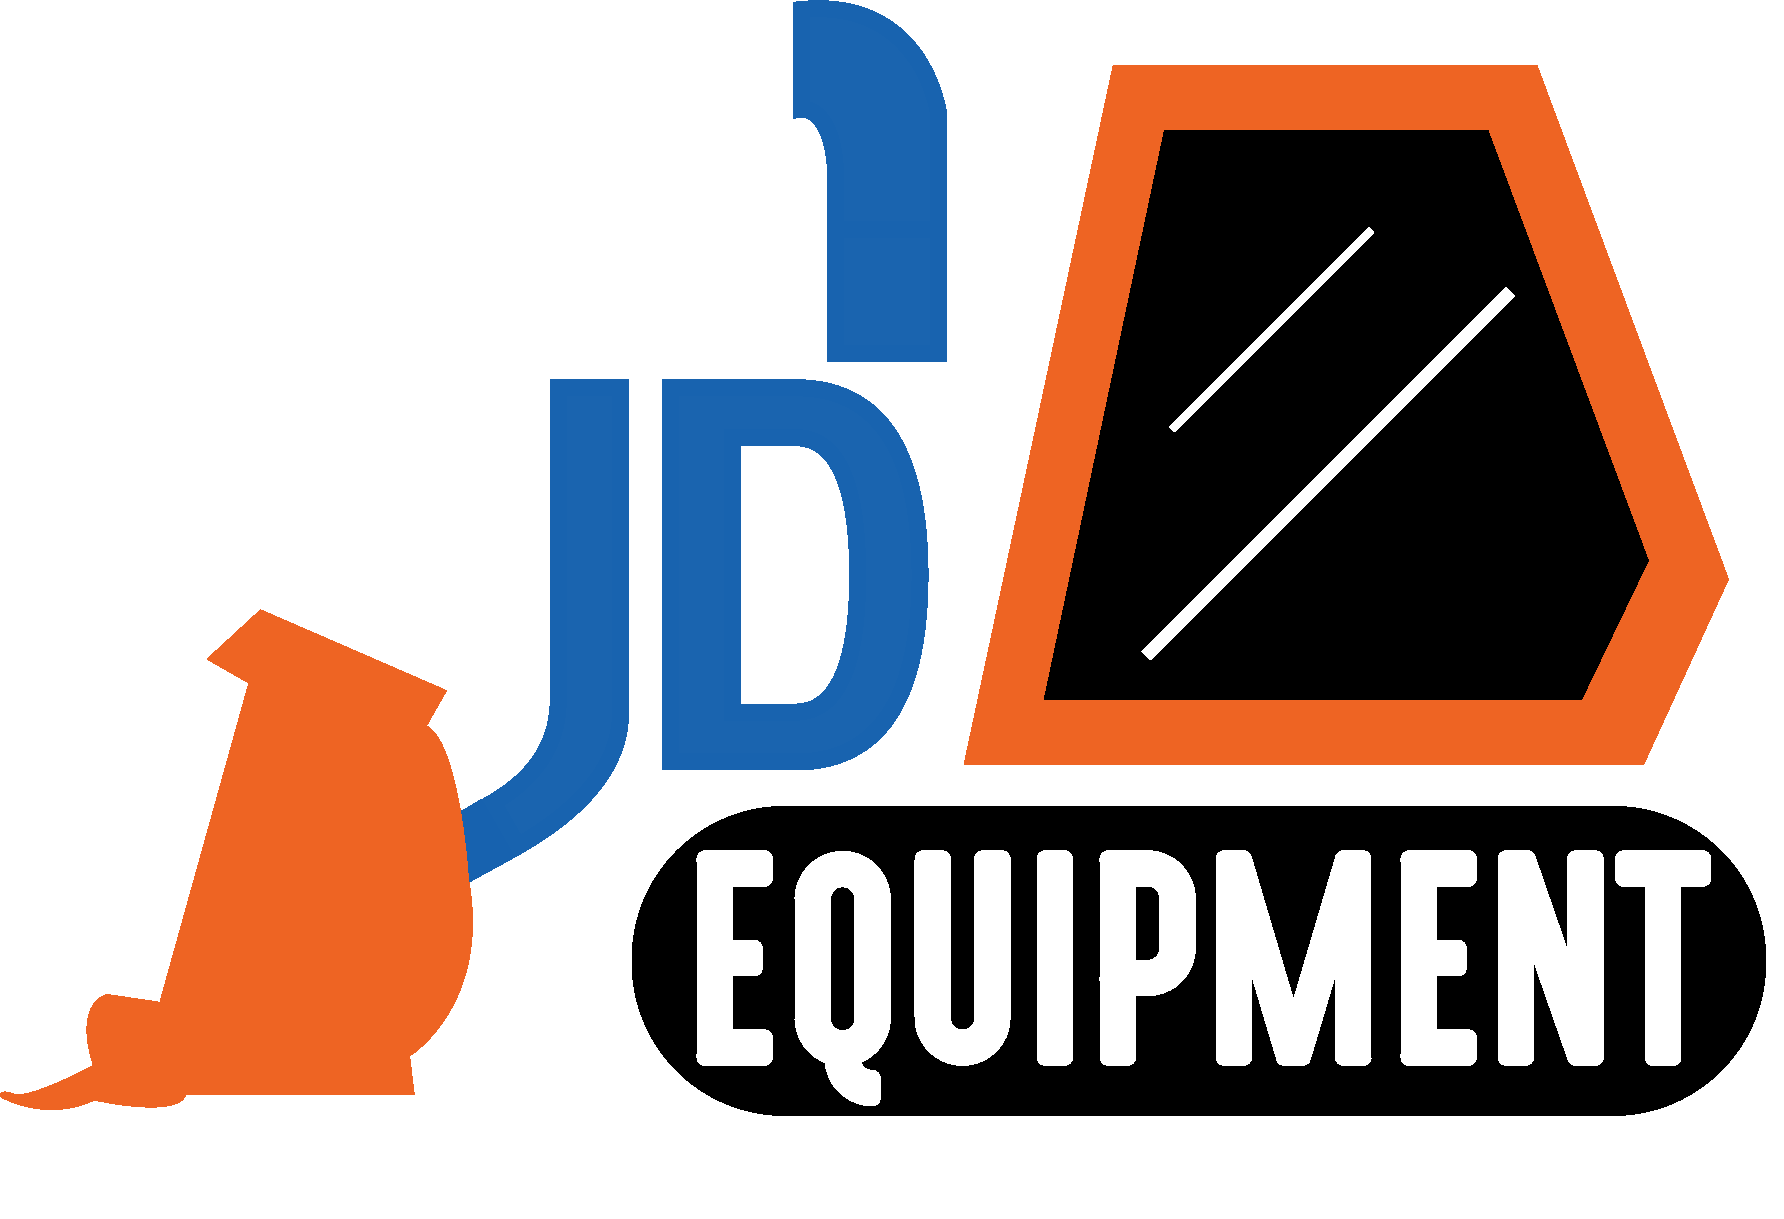 JD Equipment